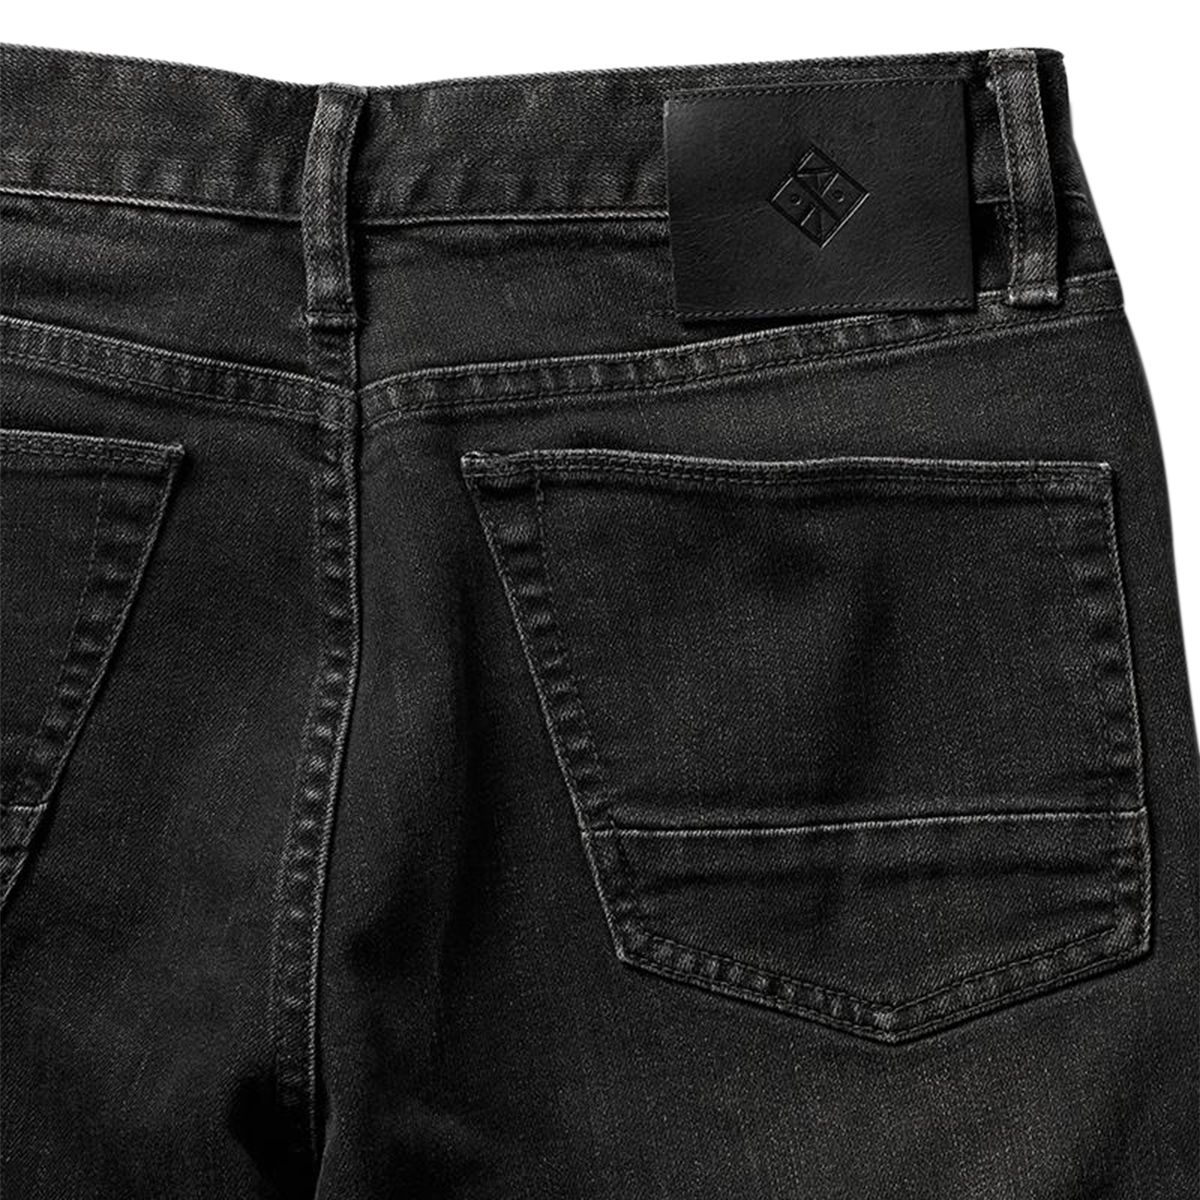 Roark HWY 128 Tough Max Jeans - Men's - Clothing